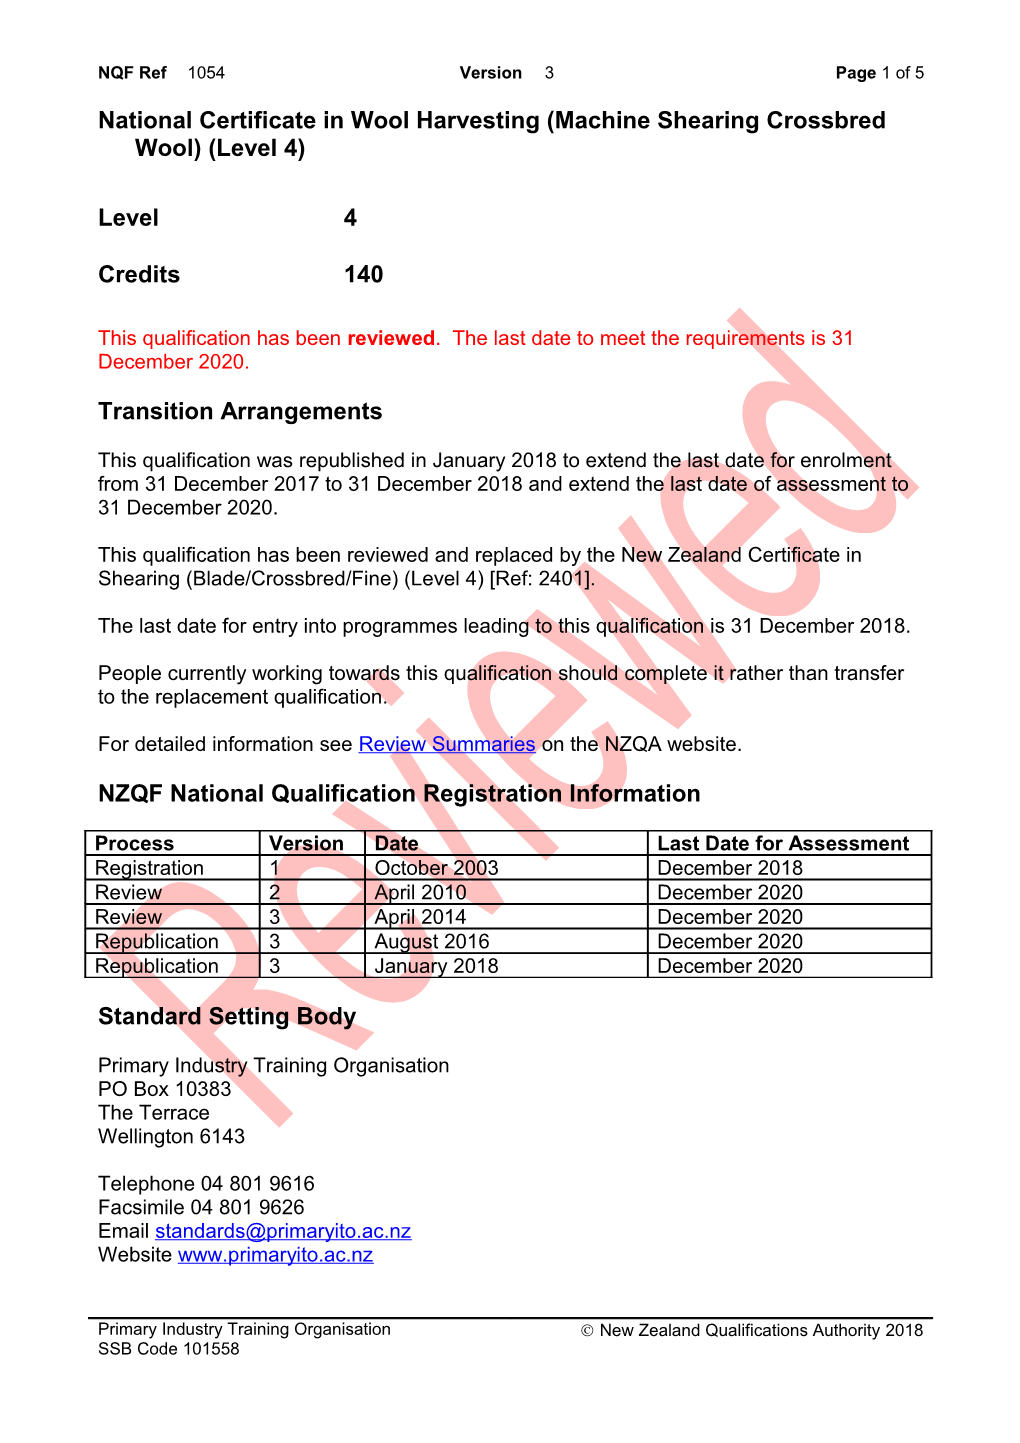 1054 National Certificate in Wool Harvesting (Machine Shearing Crossbred Wool) (Level 4)